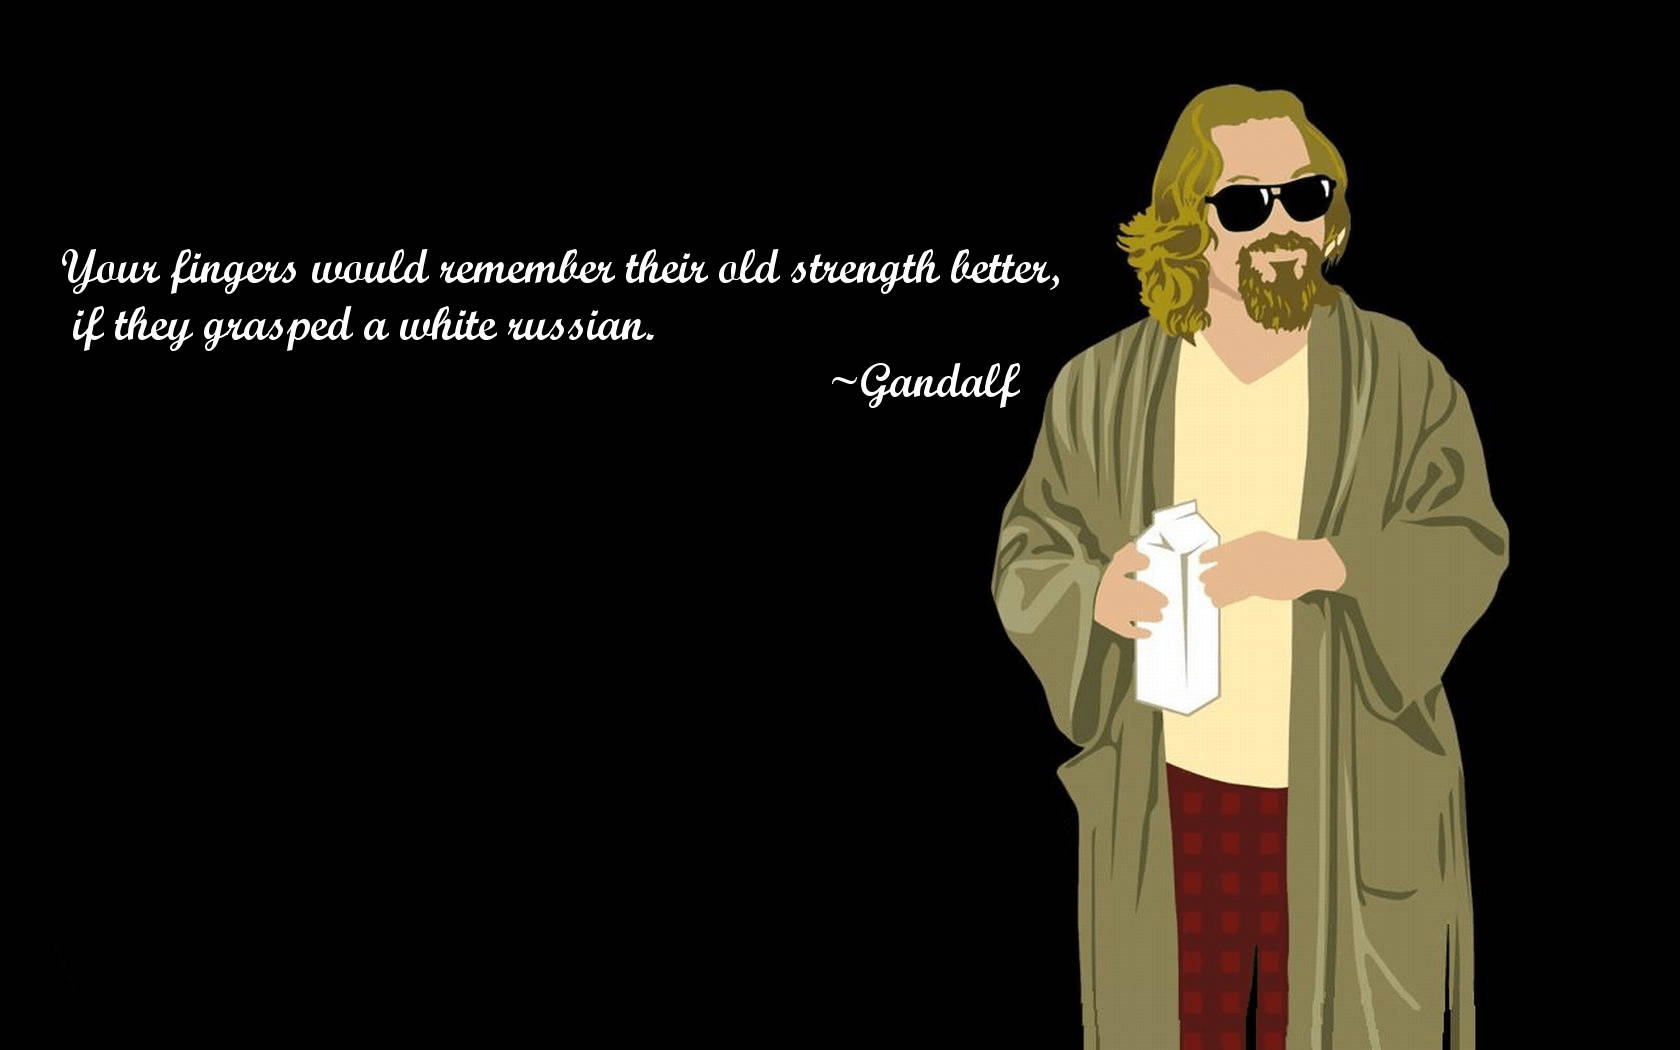 Download The Big Lebowski The Dude Gandalf Quote Art Wallpaper